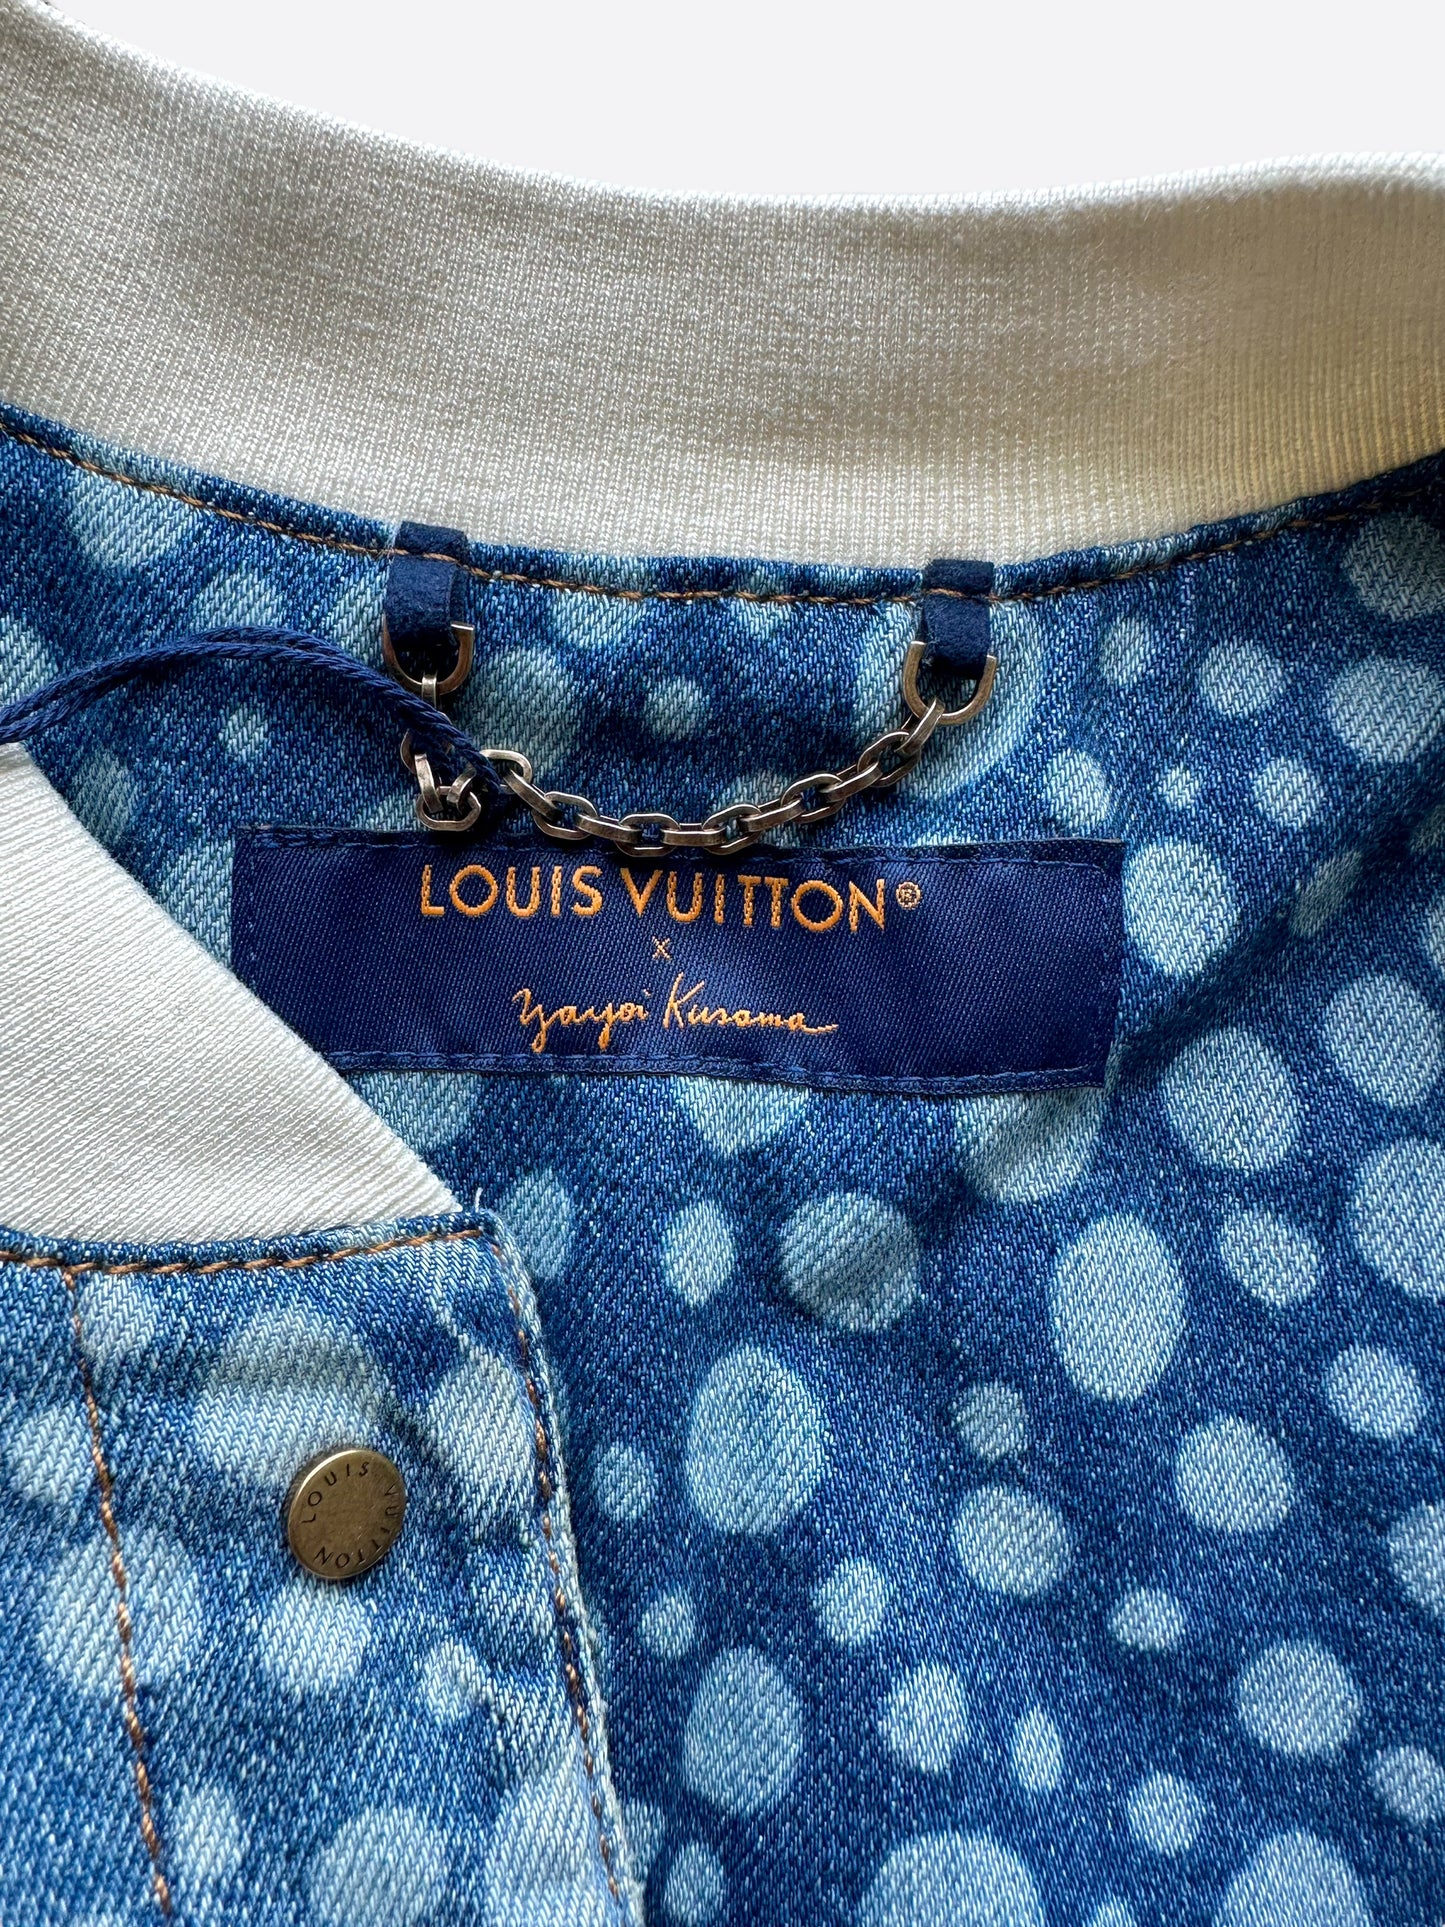 Louis Vuitton Polka Dot Mousseline Blouse